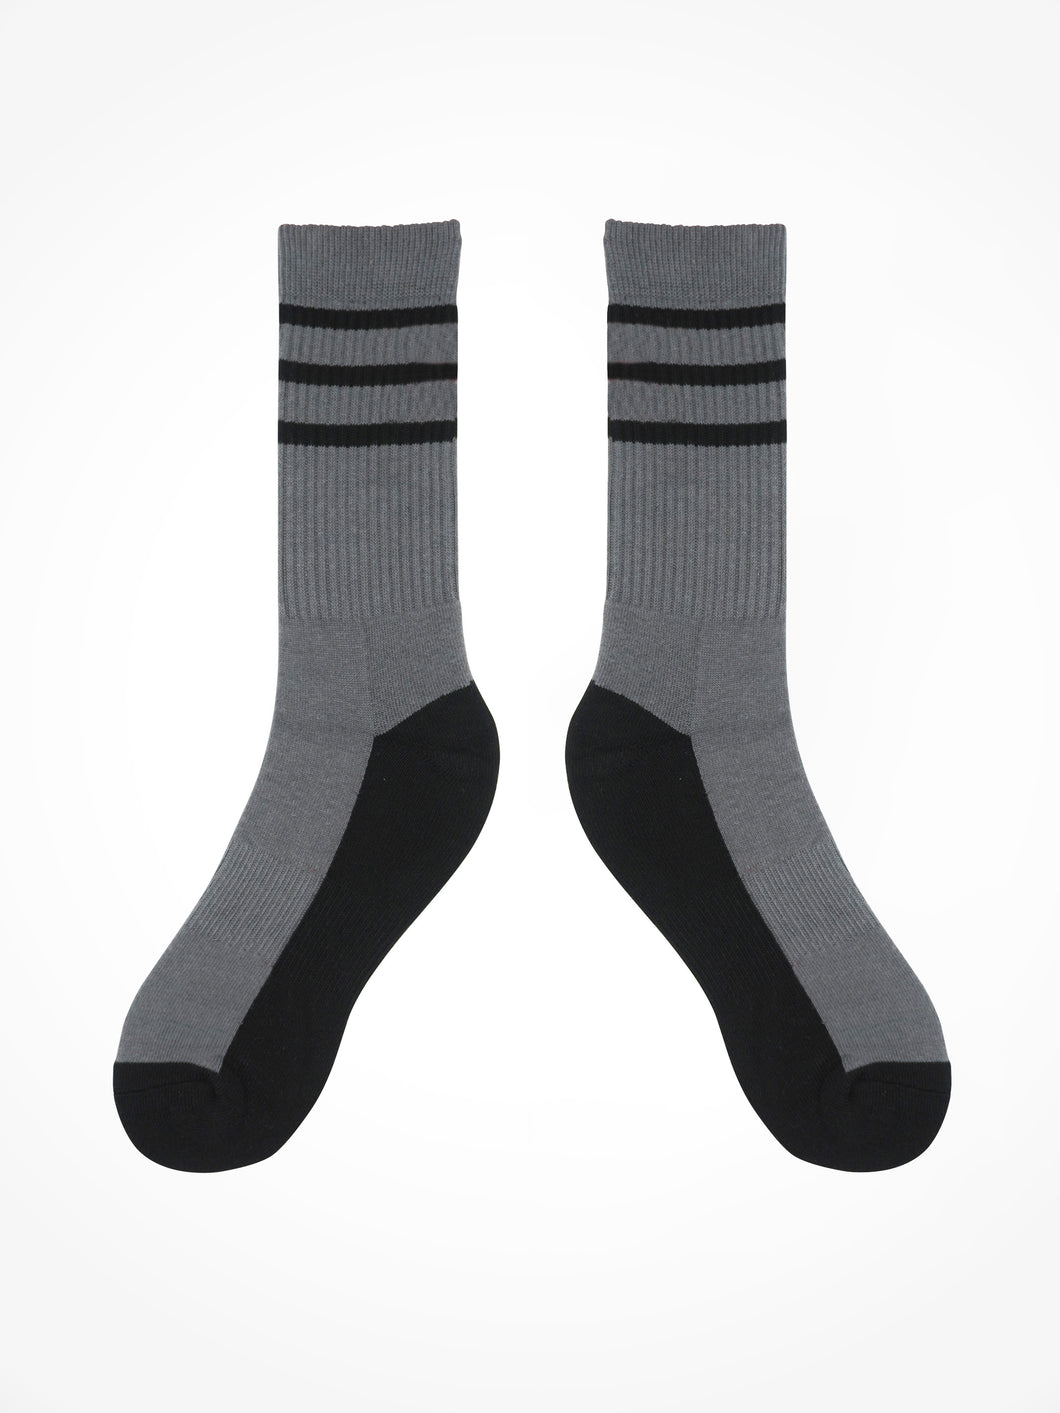 Grey and Black Socks